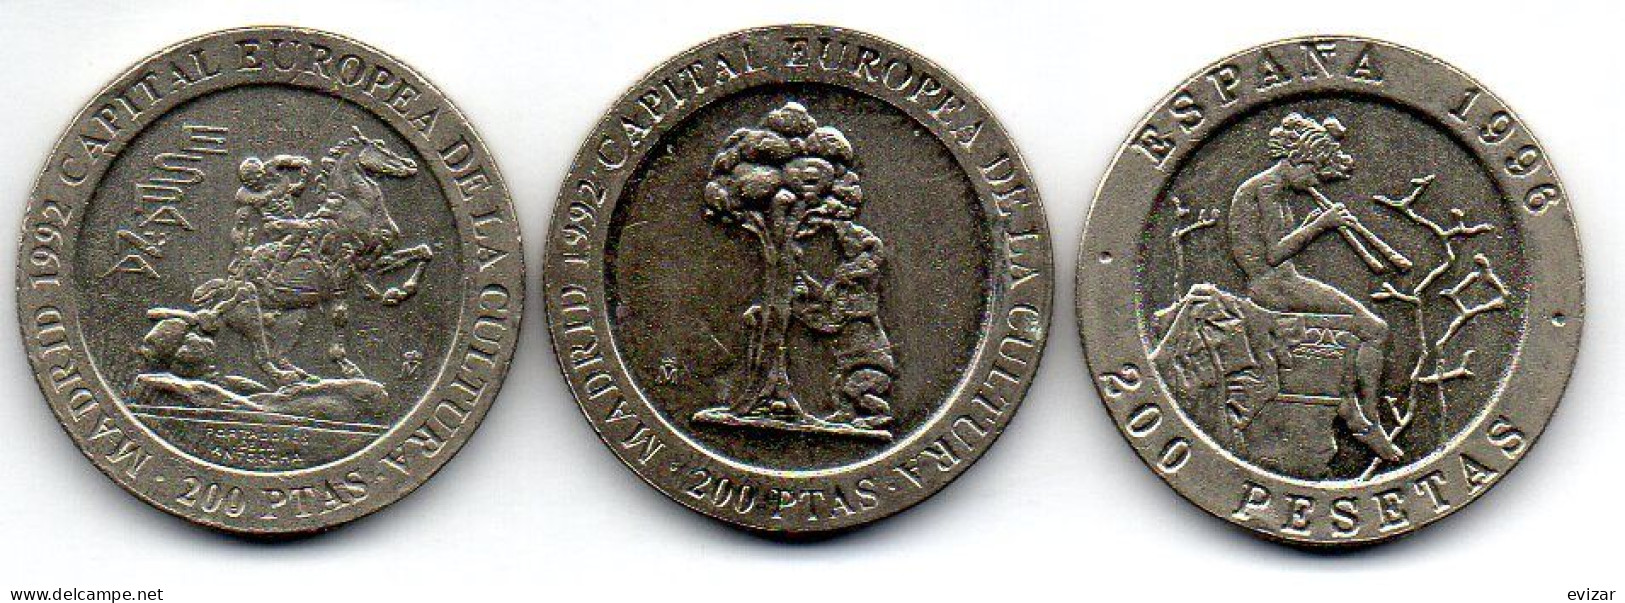 SPAIN, Set Of Three Coins 200 Pesetas, Copper-Nickel, Year 1992, 1996, KM # 909, 910, 965 - 200 Pesetas